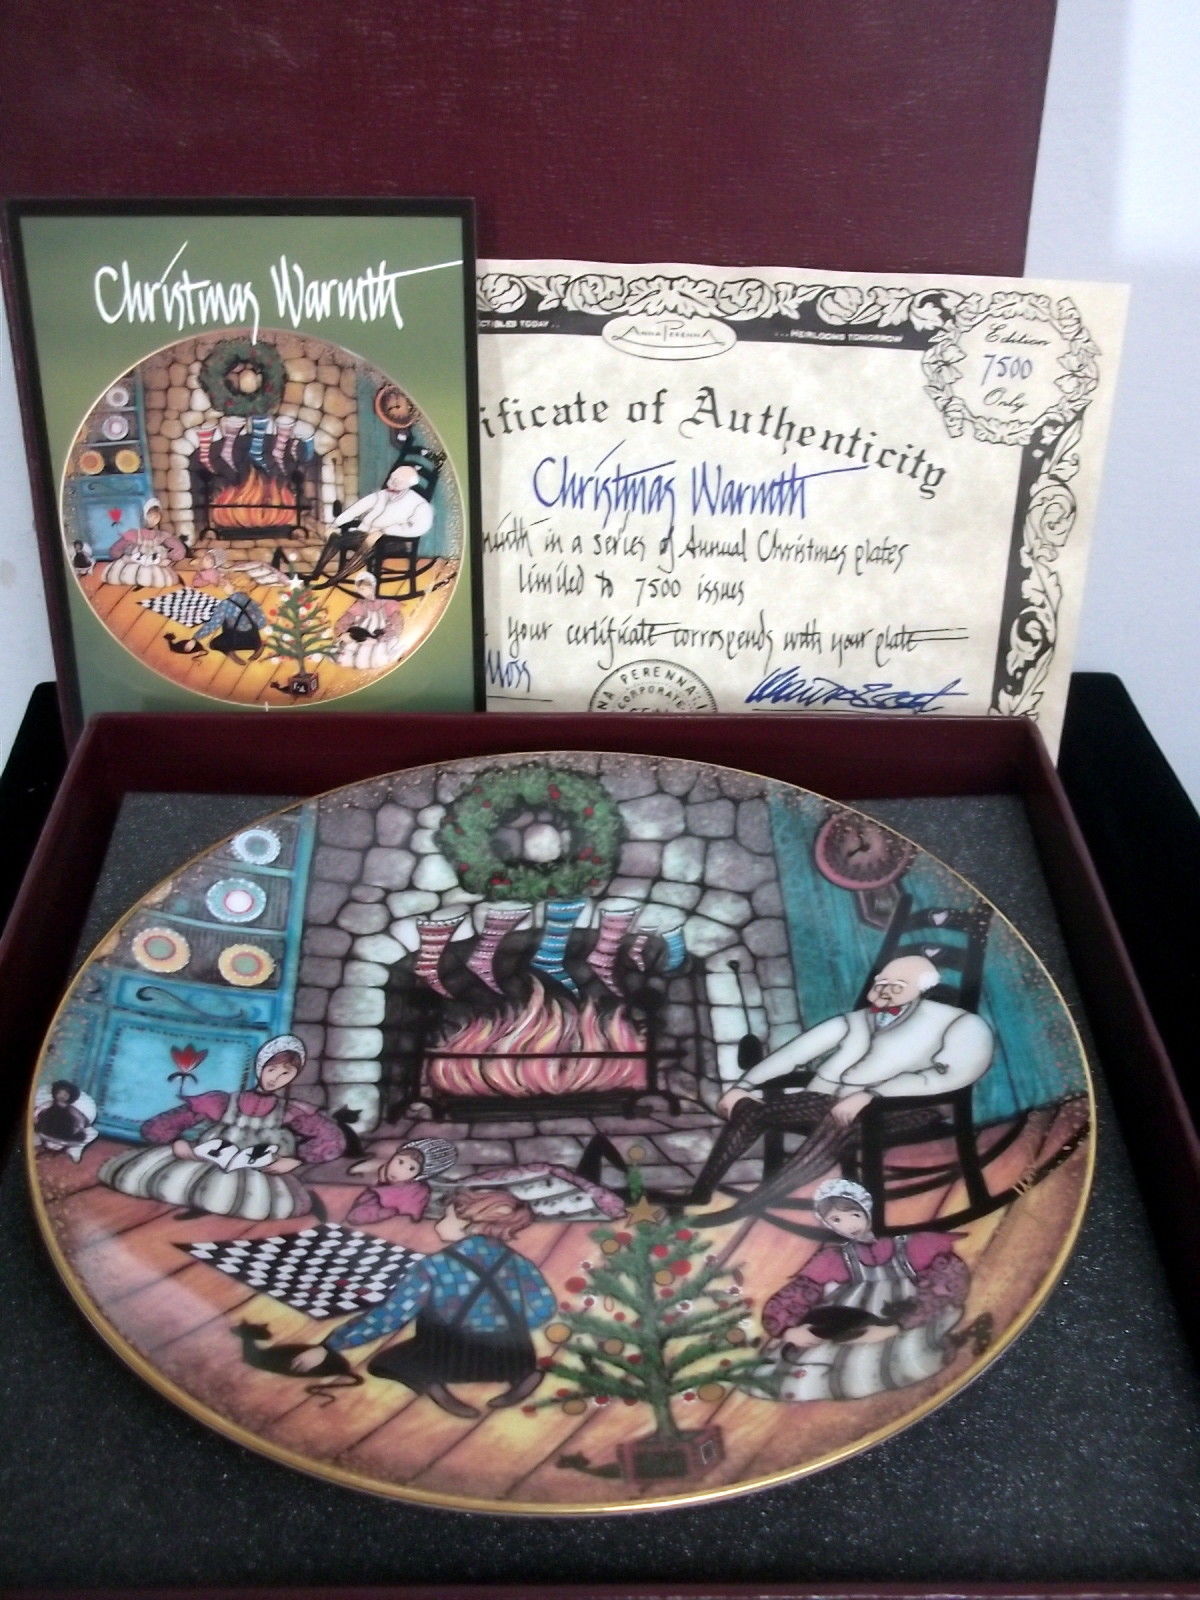 P. Buckley Moss 'Christmas Warmth' Ltd. Edition Plate - $18.00